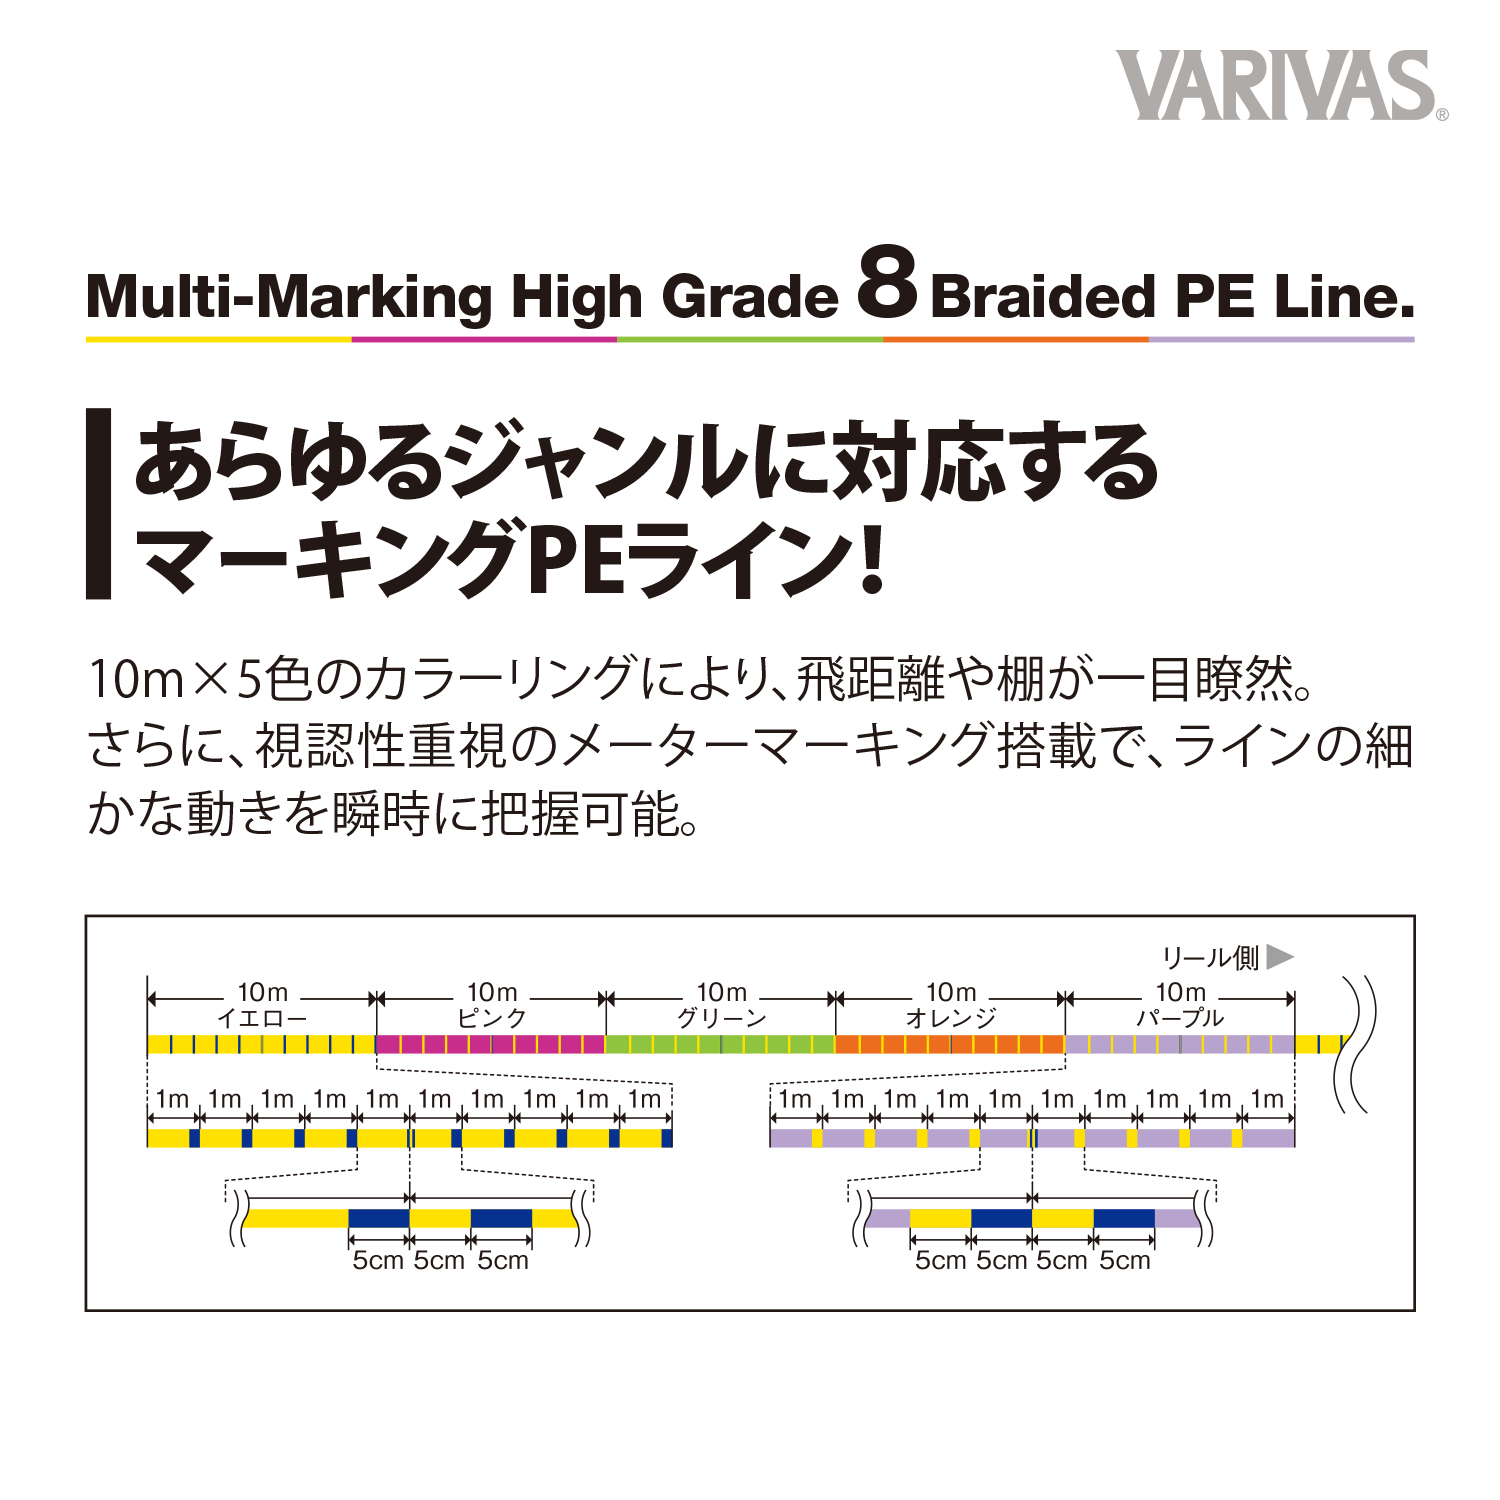 VARIVAS High Grade PE Marking Type-II X4 150m #2 30lb Multicolor PE Braid 